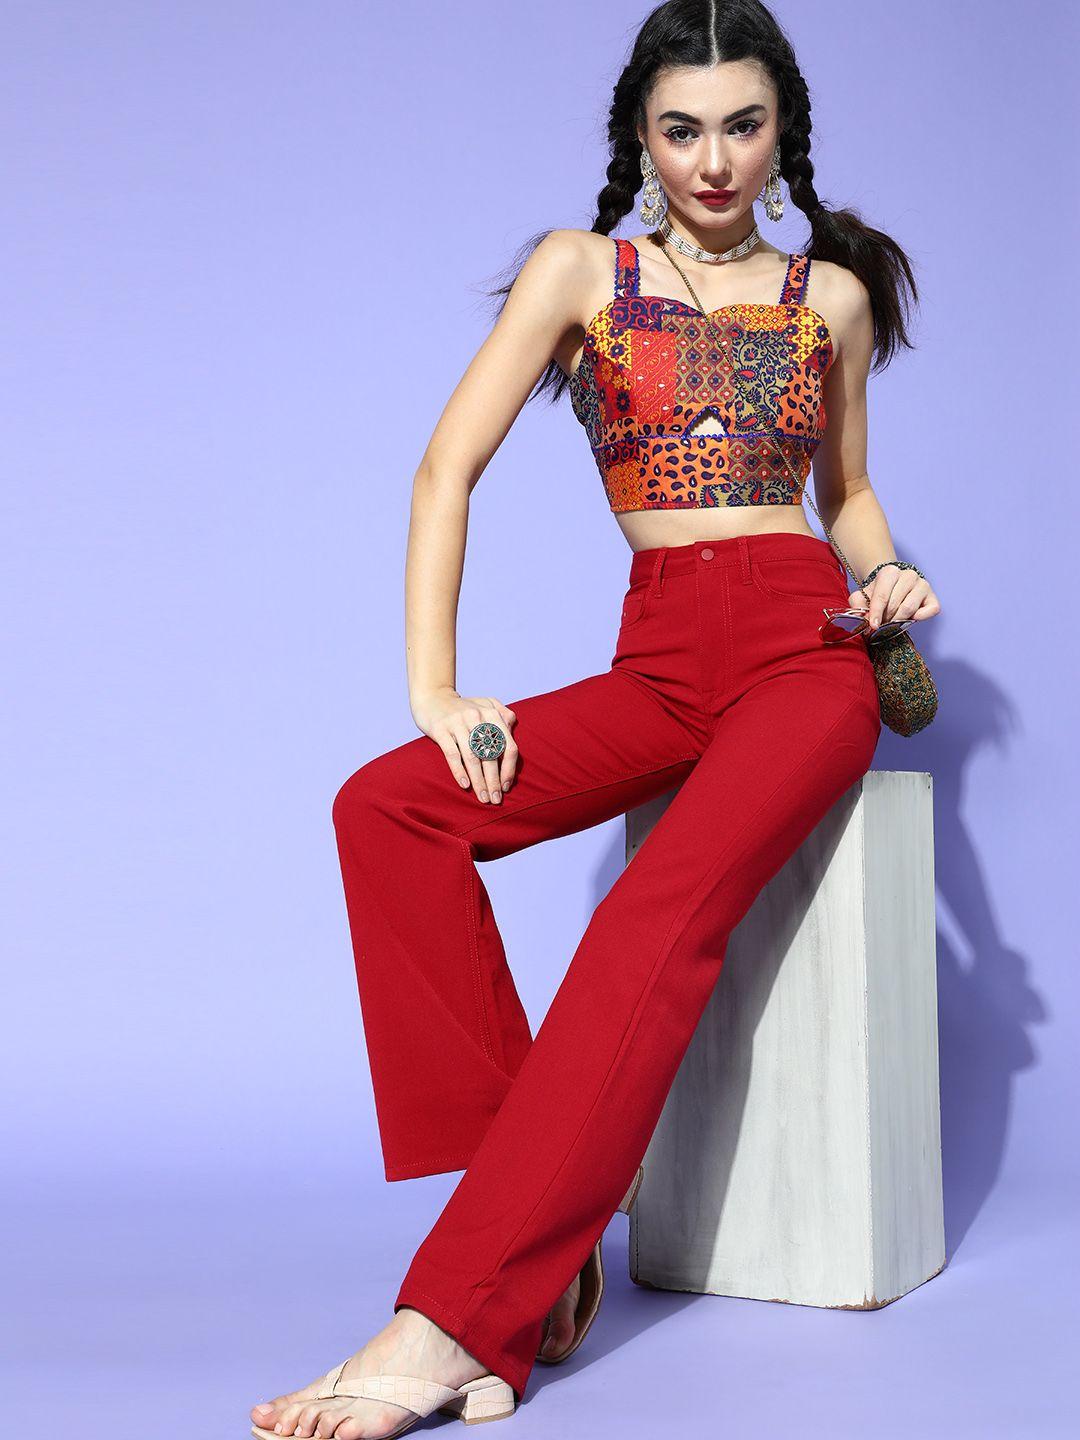 inddus women multi-coloured ethnic motifs ethnic fusion top